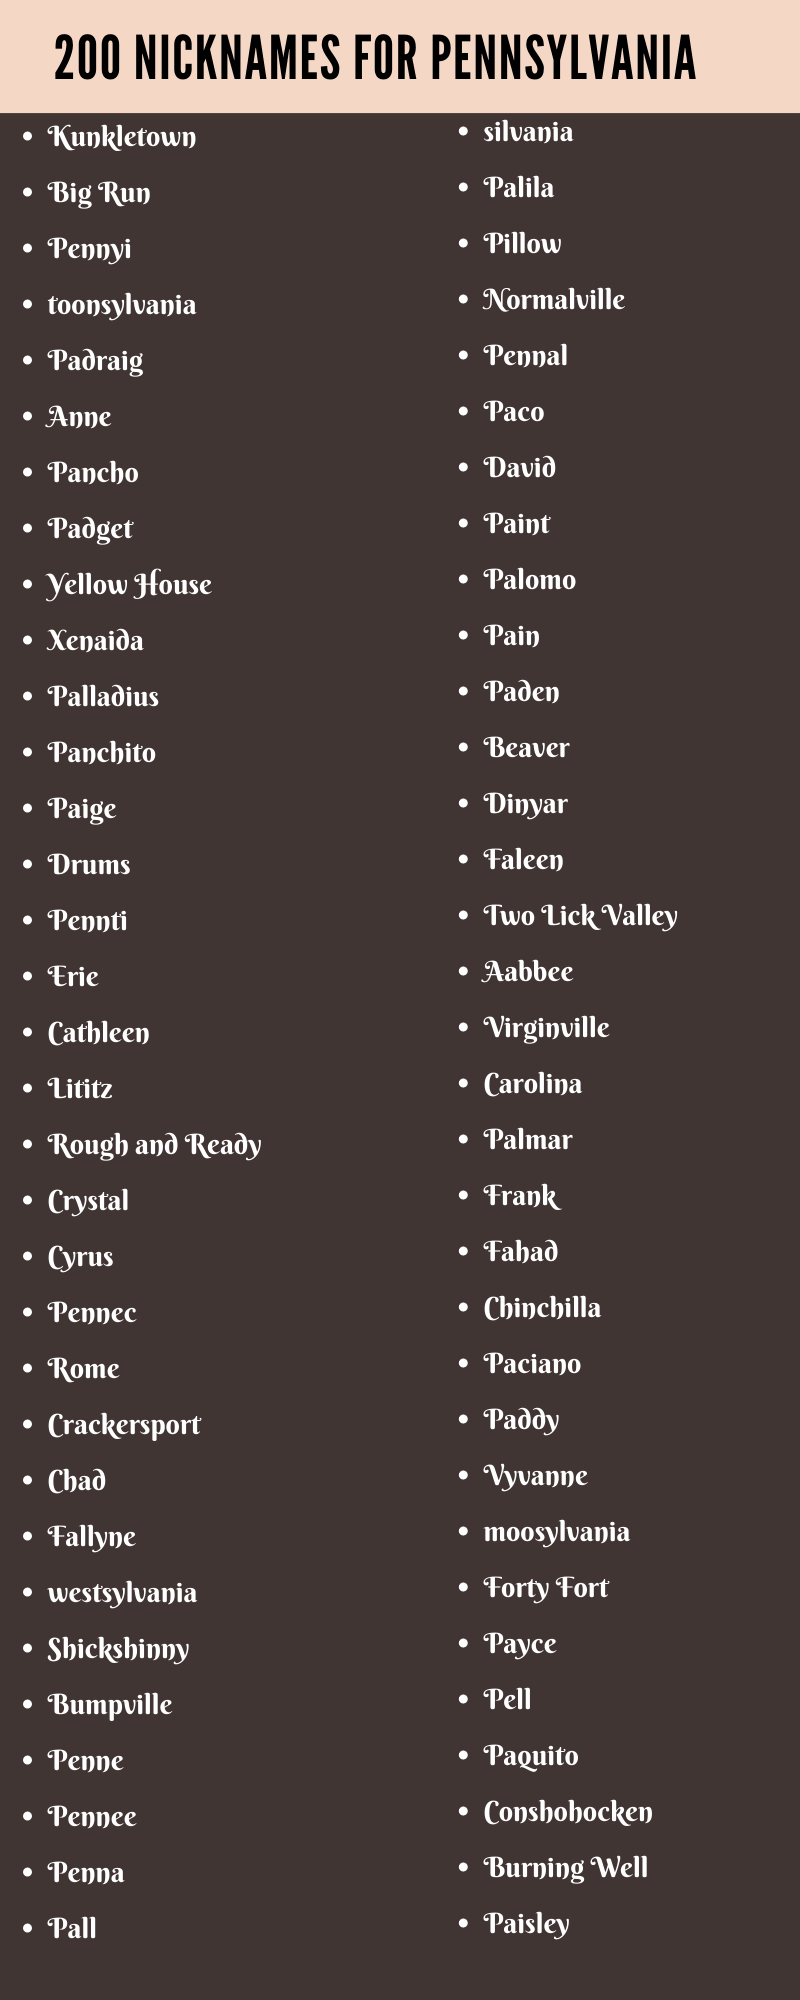 nicknames for pennsylvania